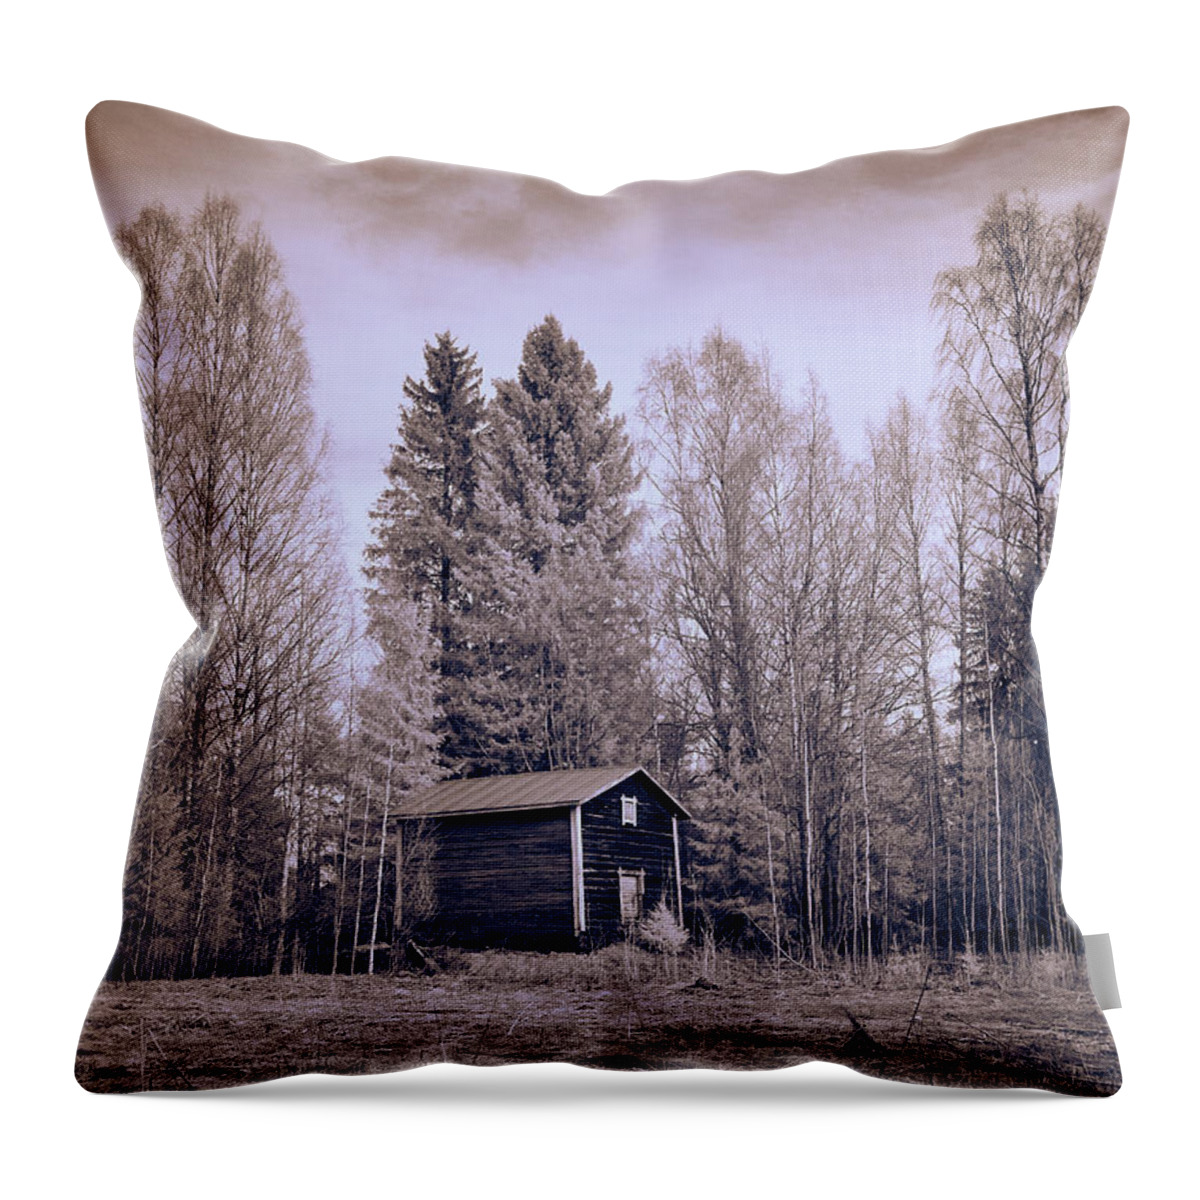 Finland Throw Pillow featuring the photograph Aitta by Jouko Lehto